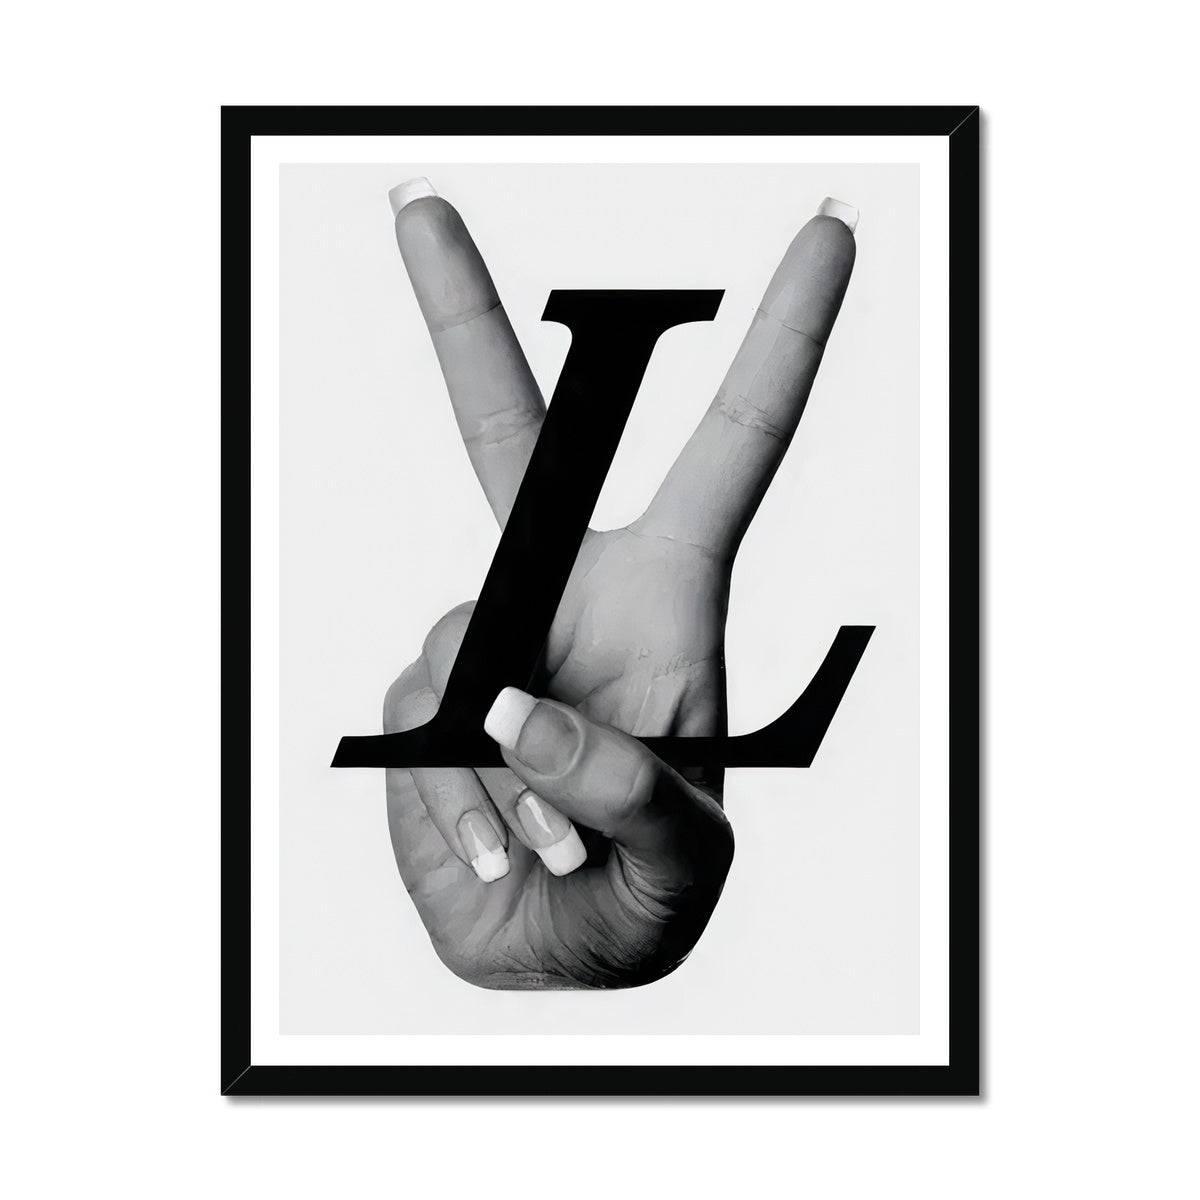 louis vuitton peace and love logo